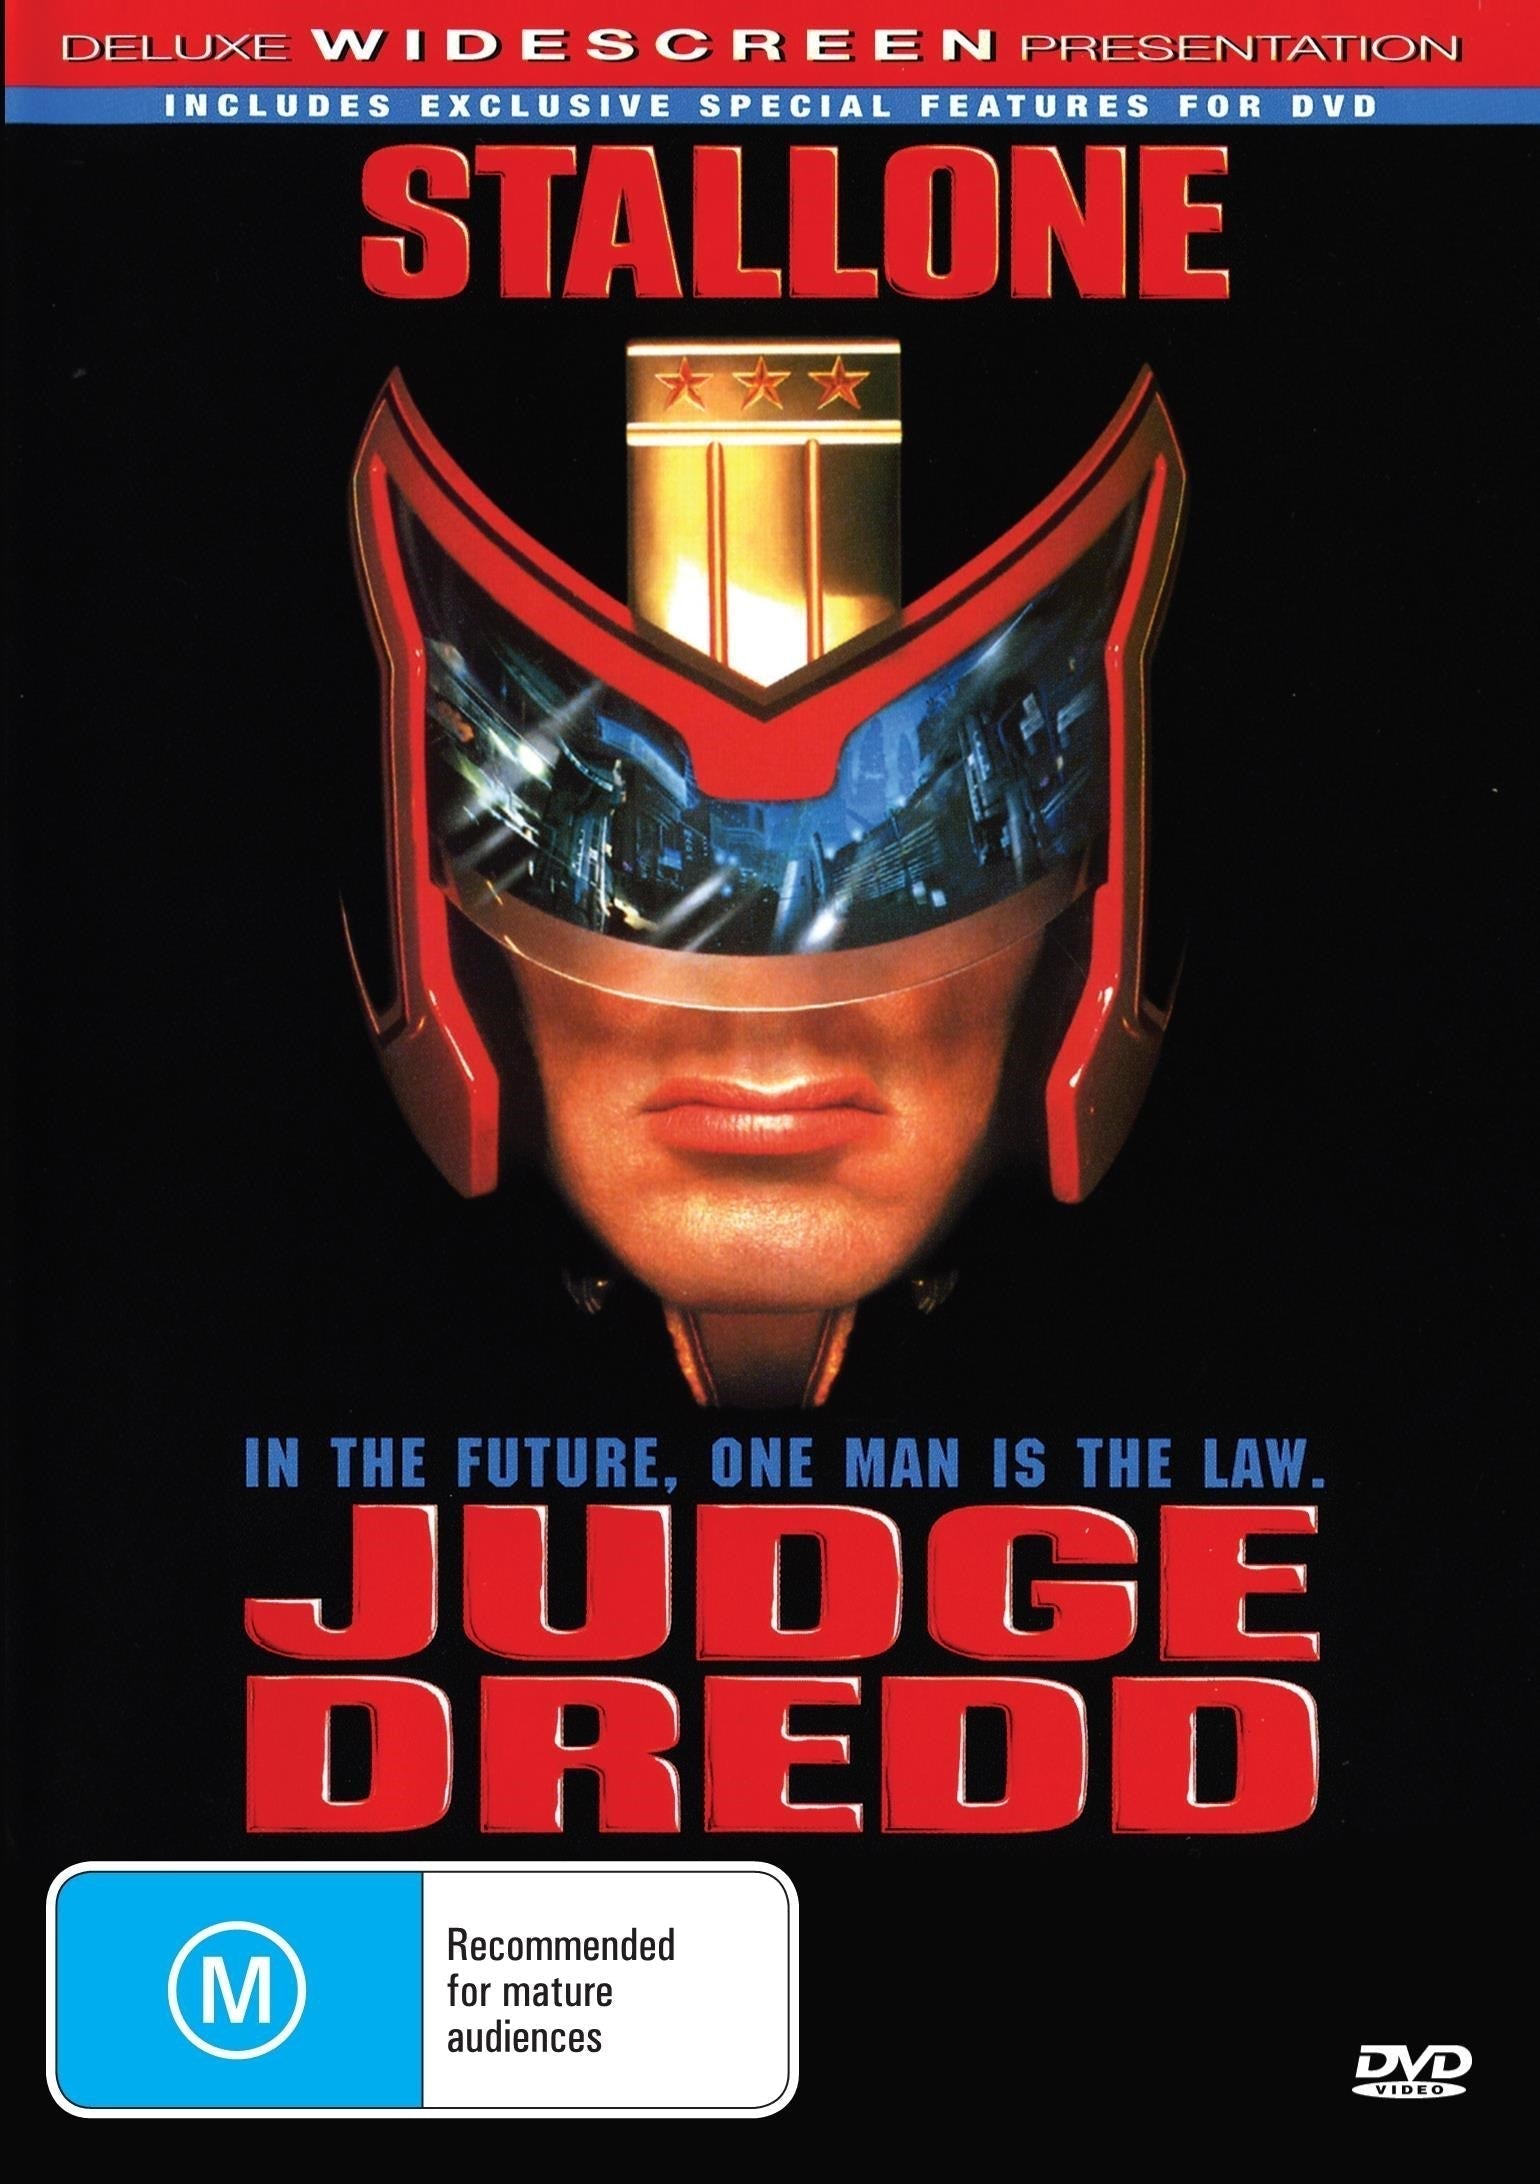 Judge Dredd rareandcollectibledvds